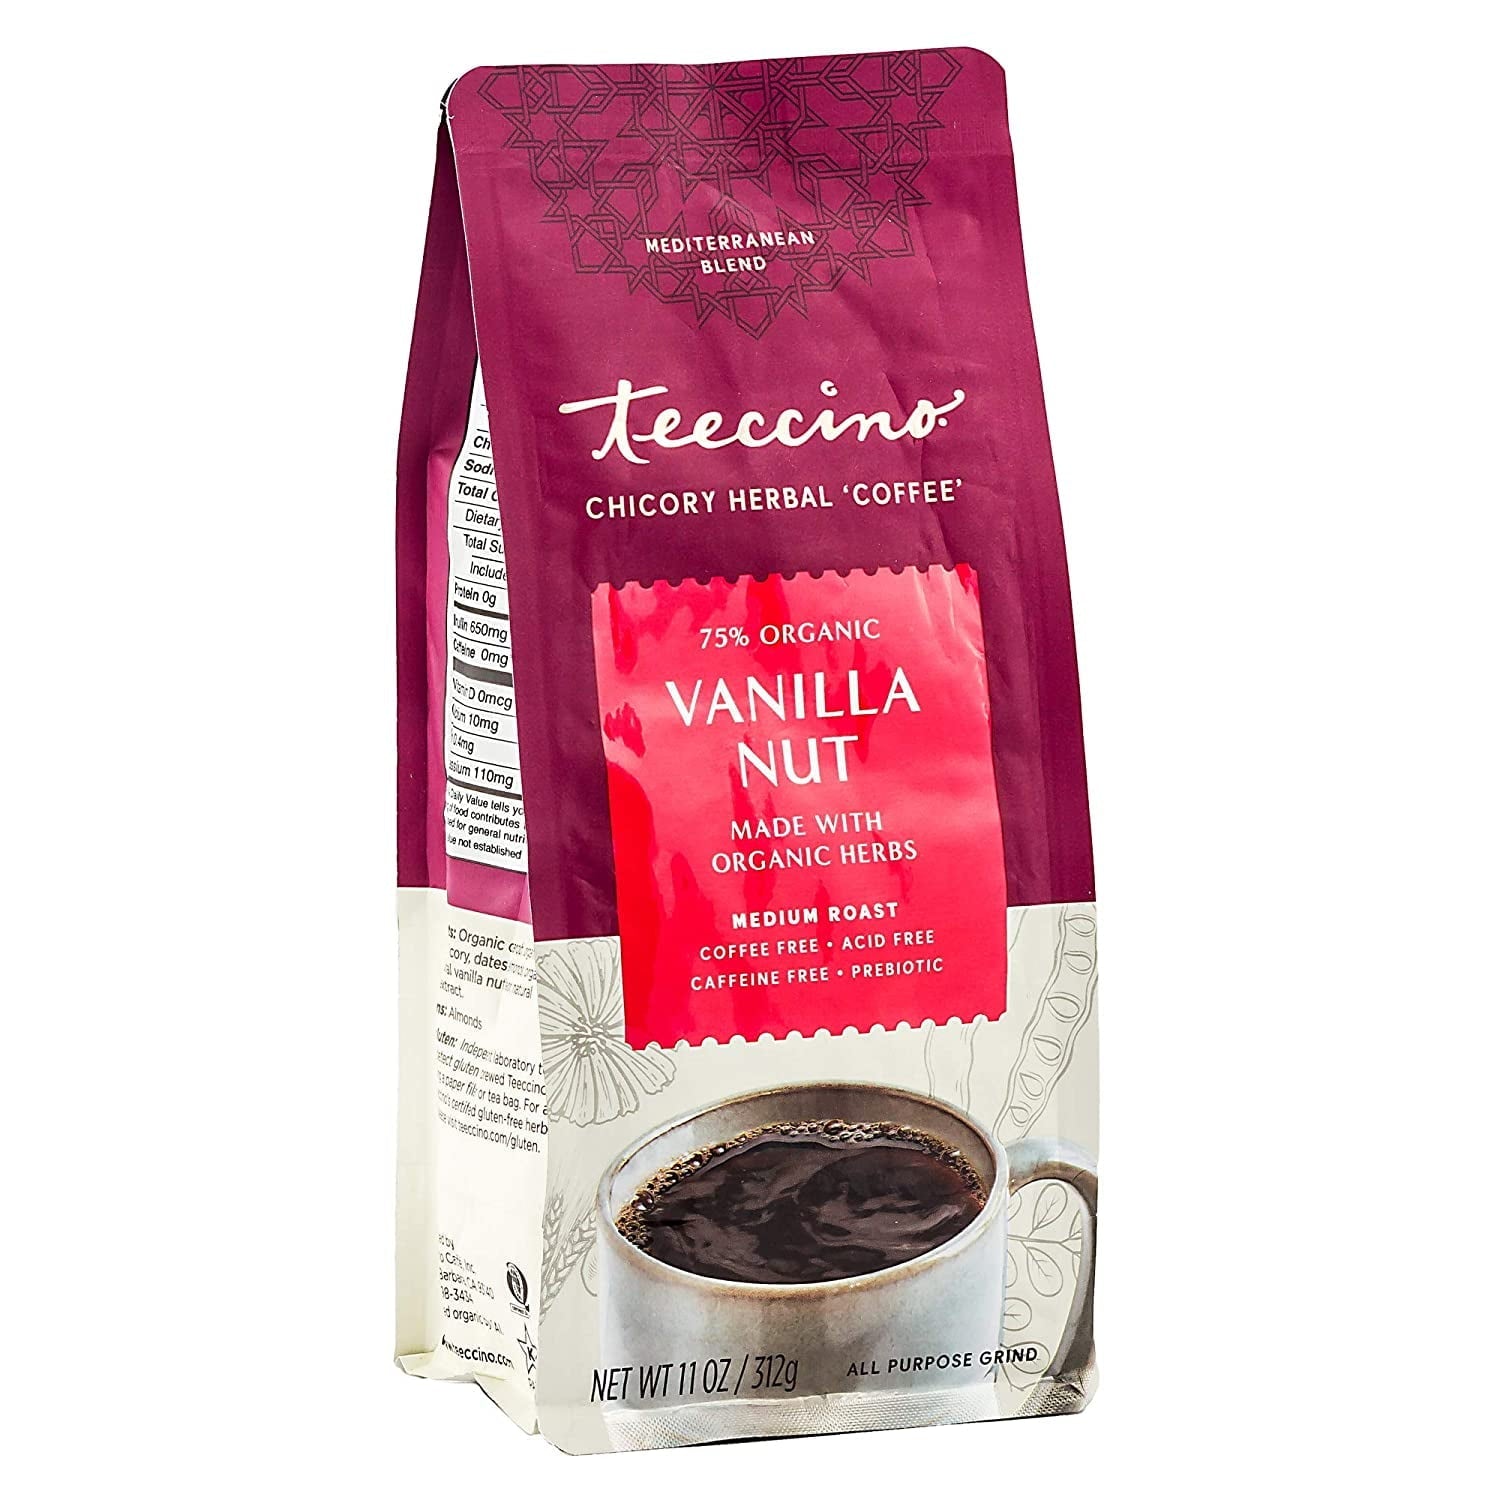 Teeccino Mediterranean Herbal Coffee Vanilla Nut 11 Oz